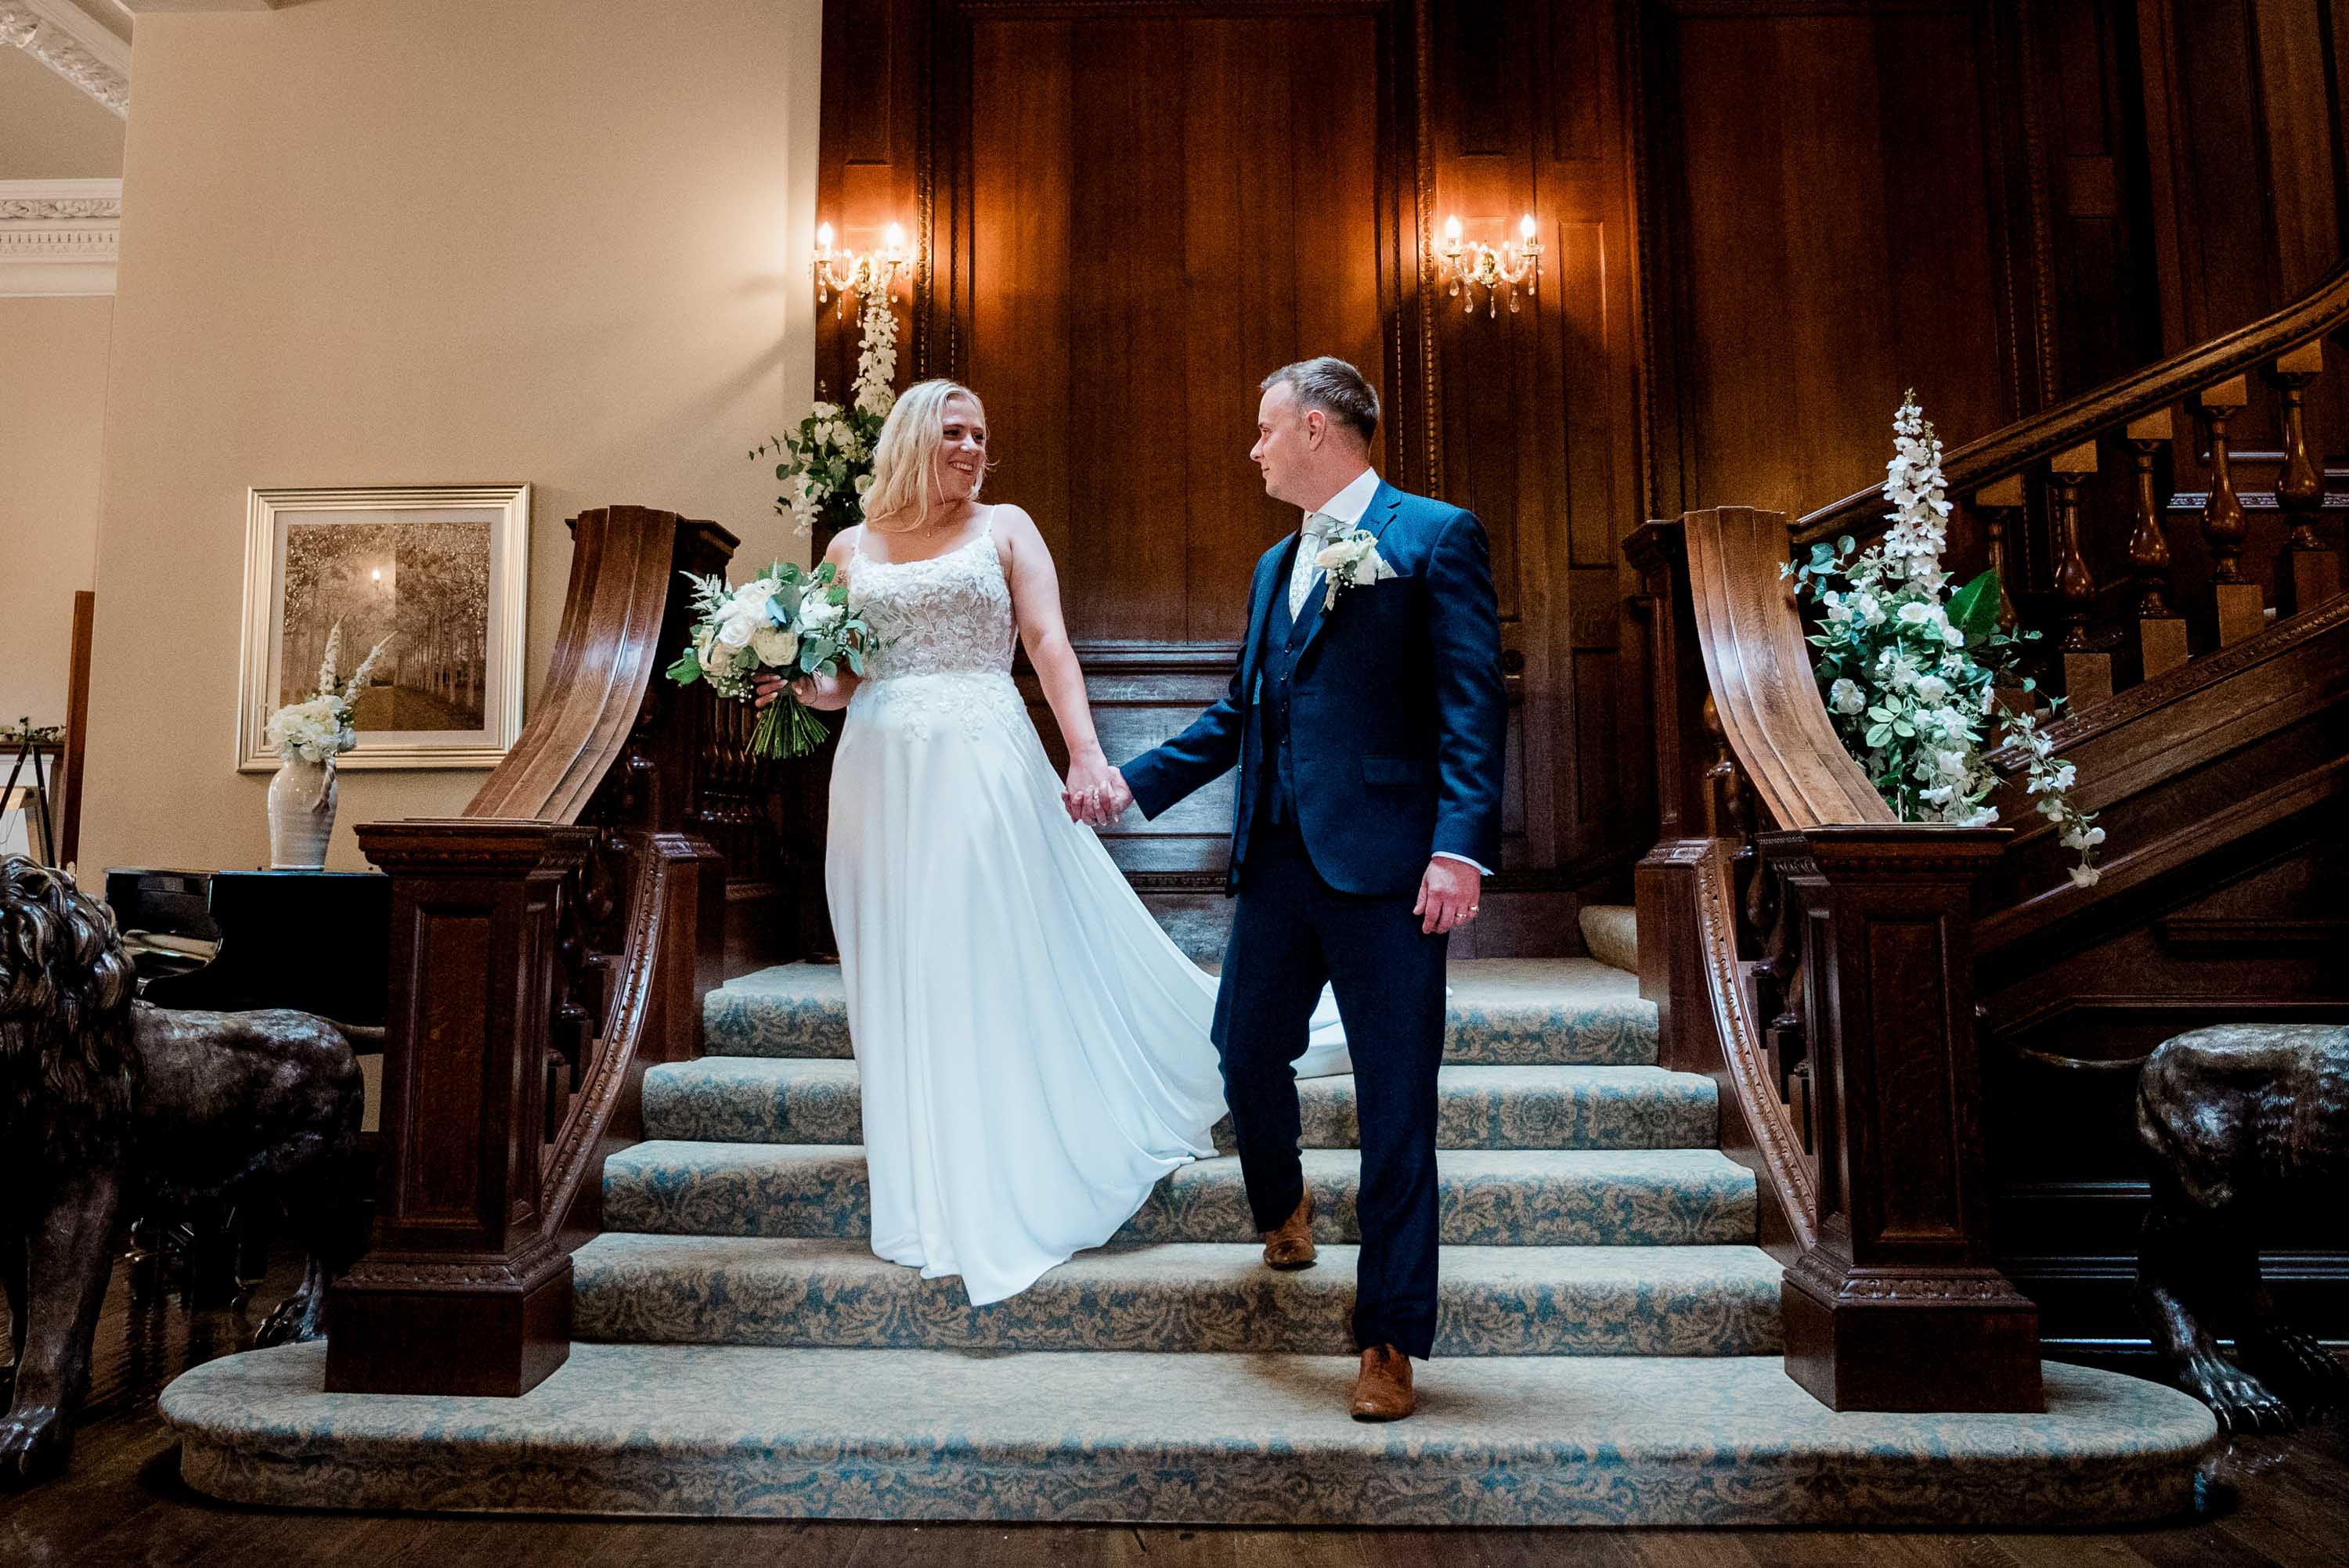 Kara & Rich’s Wedding Photography – Bourton Hall, Warwickshire